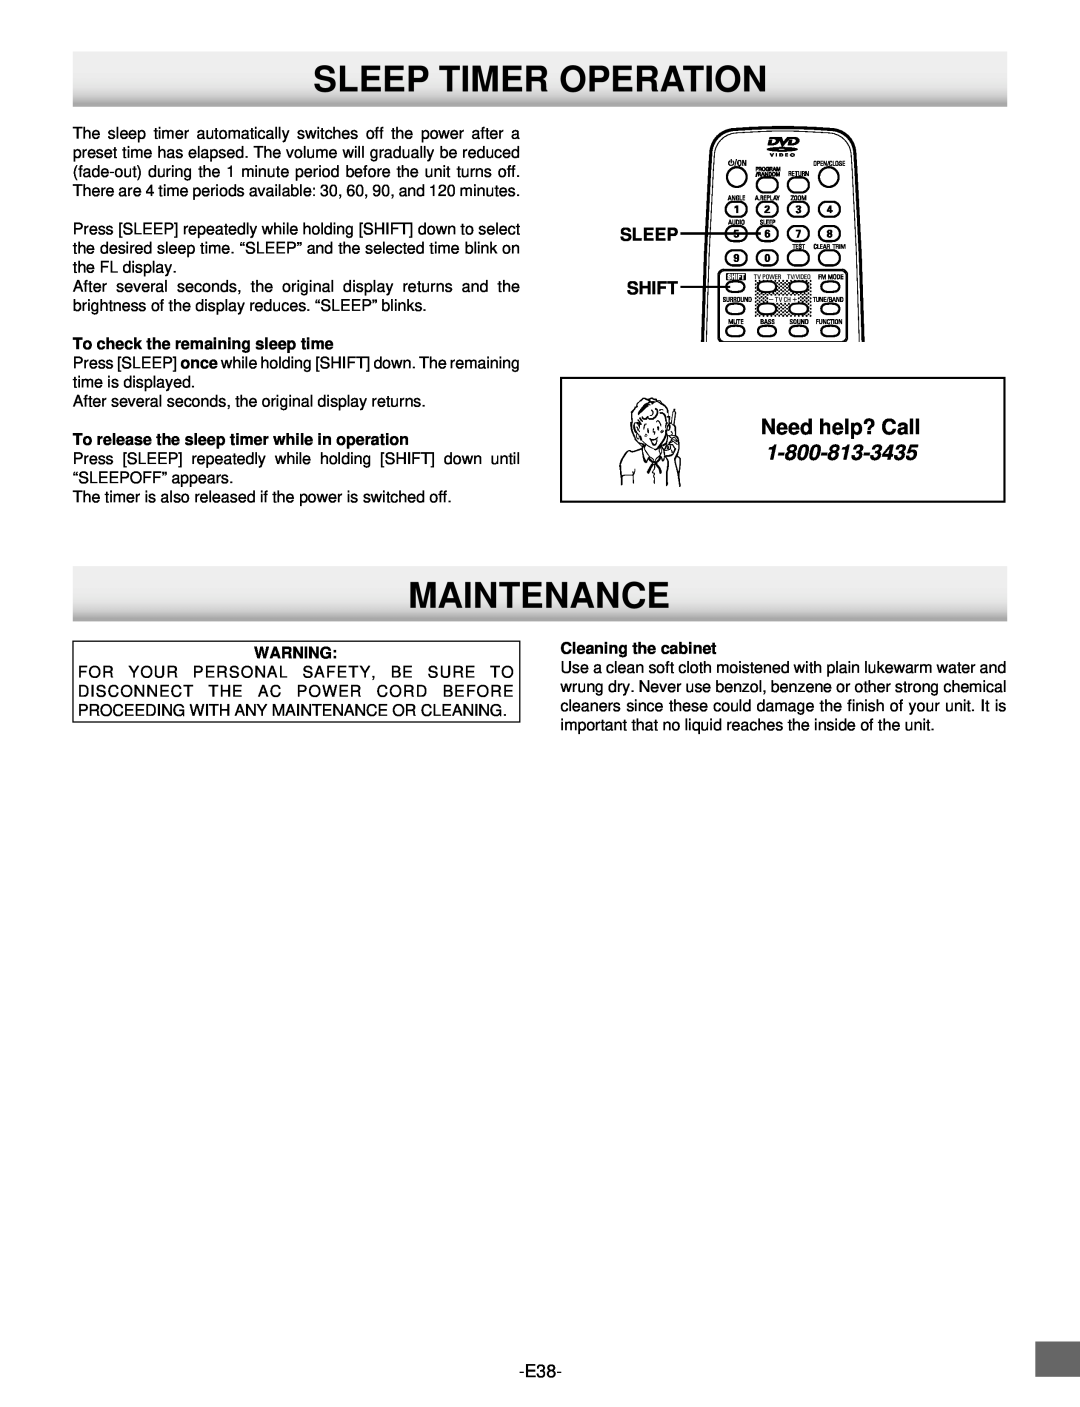 Sanyo DWM-2500 instruction manual Sleep Timer Operation, Maintenance, Need help? Call, To check the remaining sleep time 